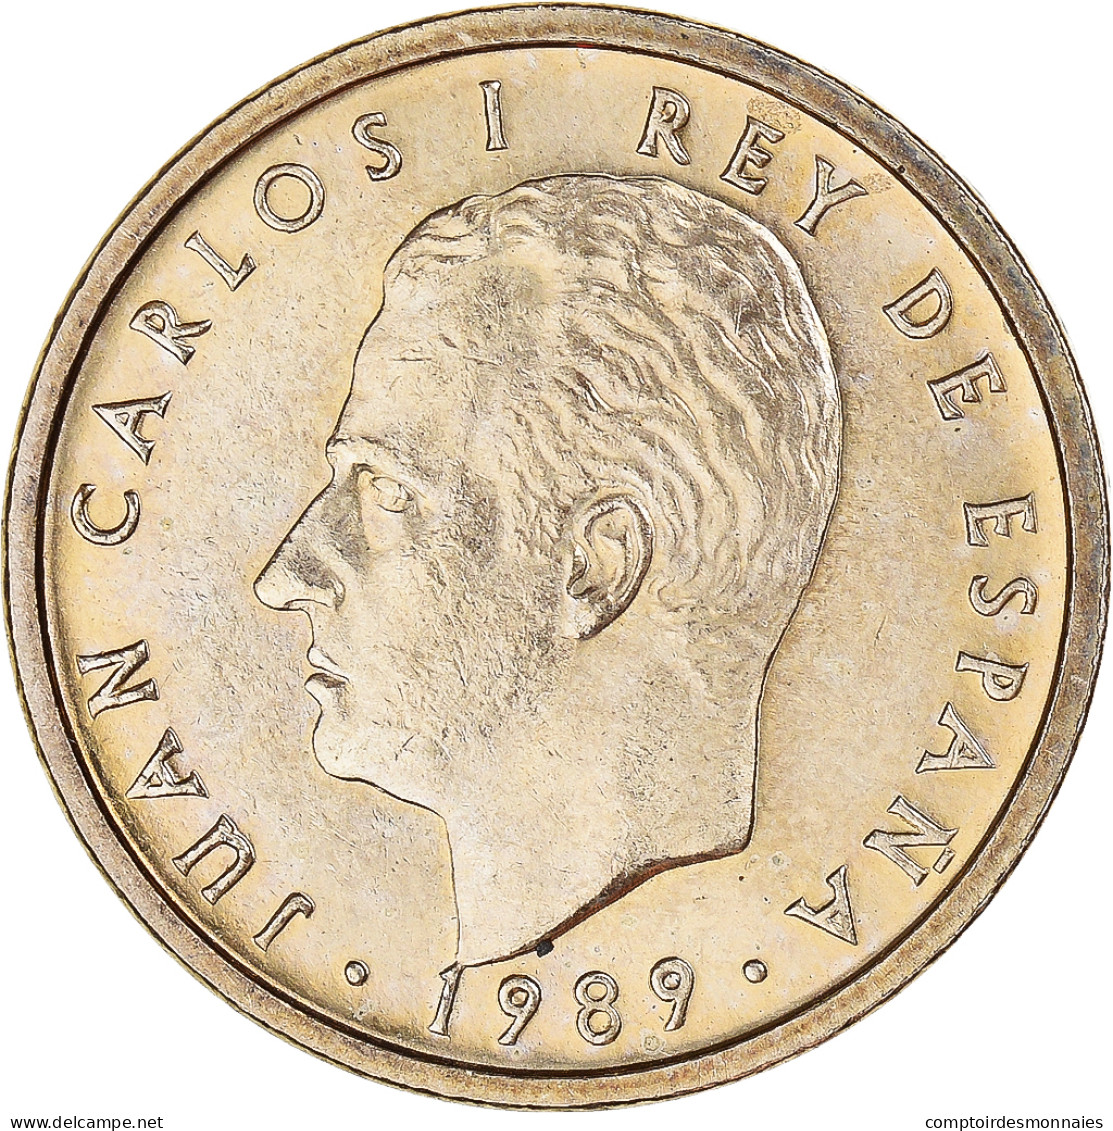 Monnaie, Espagne, 100 Pesetas, 1989 - 100 Pesetas